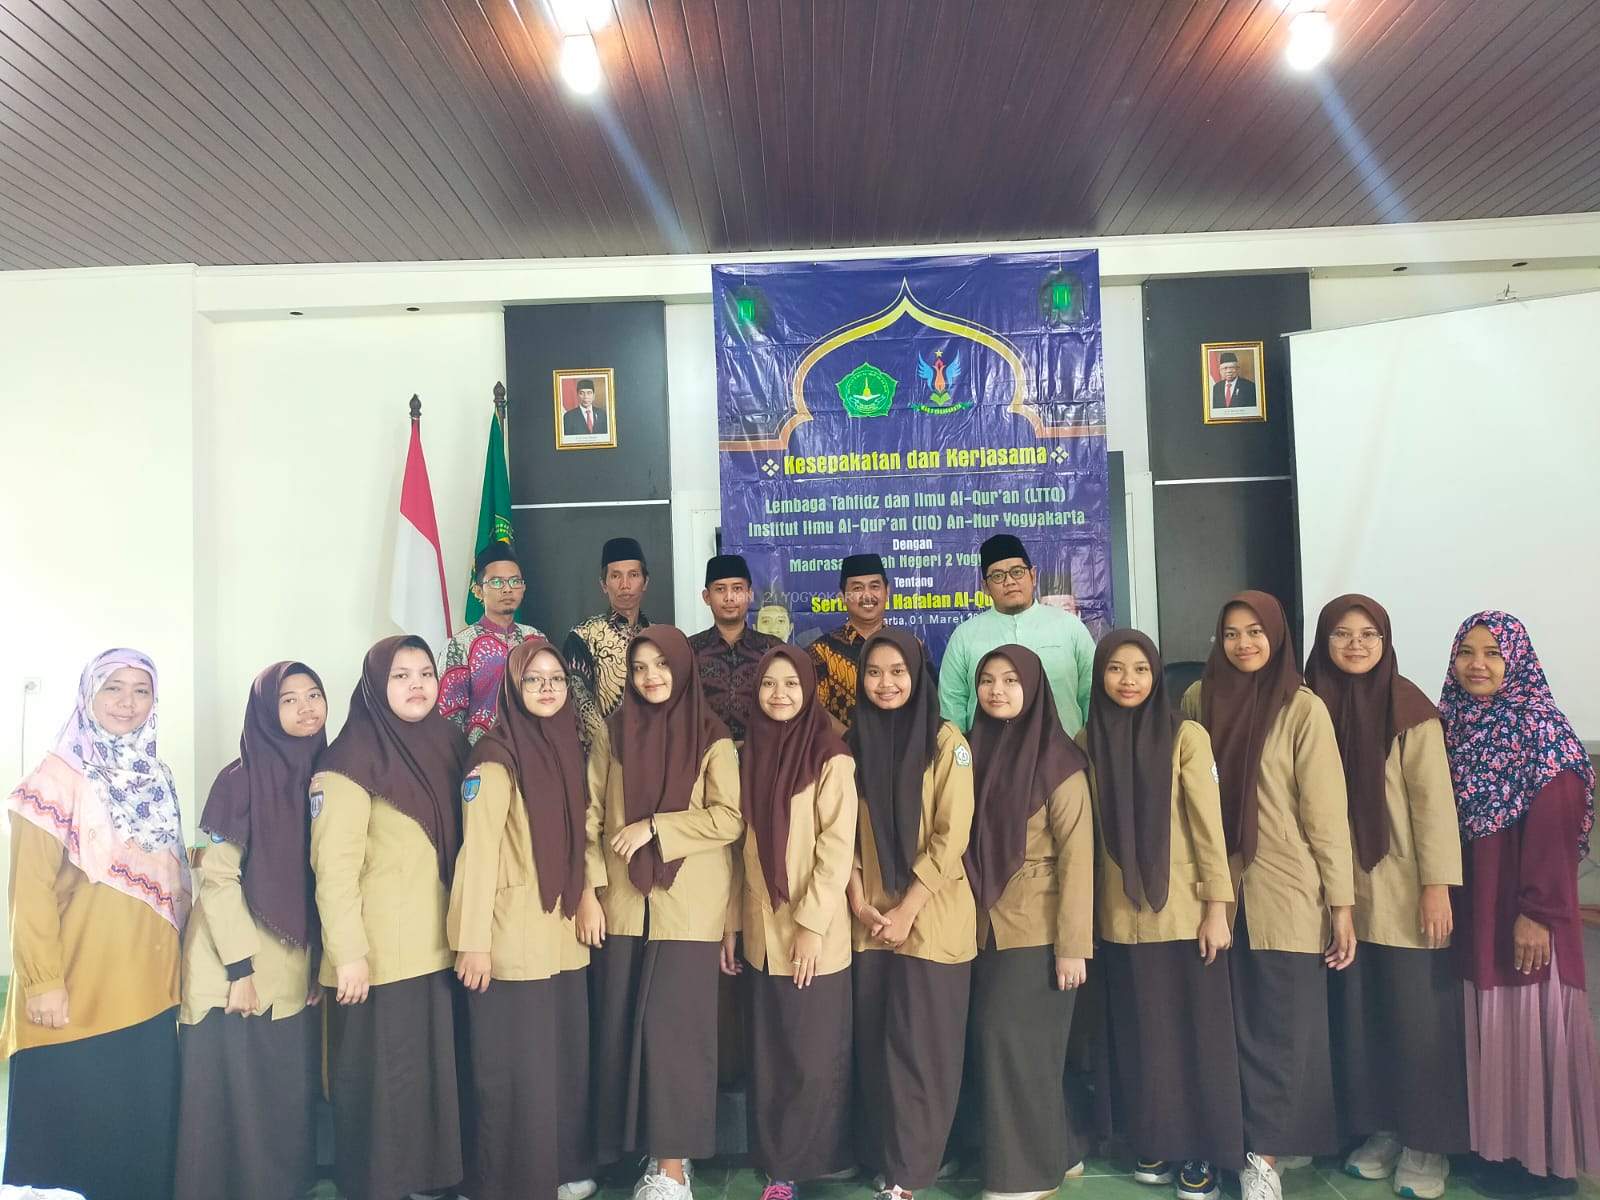 Kesepakatan dan kerjasama tentang sertifikasi hafalan Al-Qur'an dengan lembaga Tahfidz dan Tahsin al-Qur’an IIQ An-Nur Yogyakarta